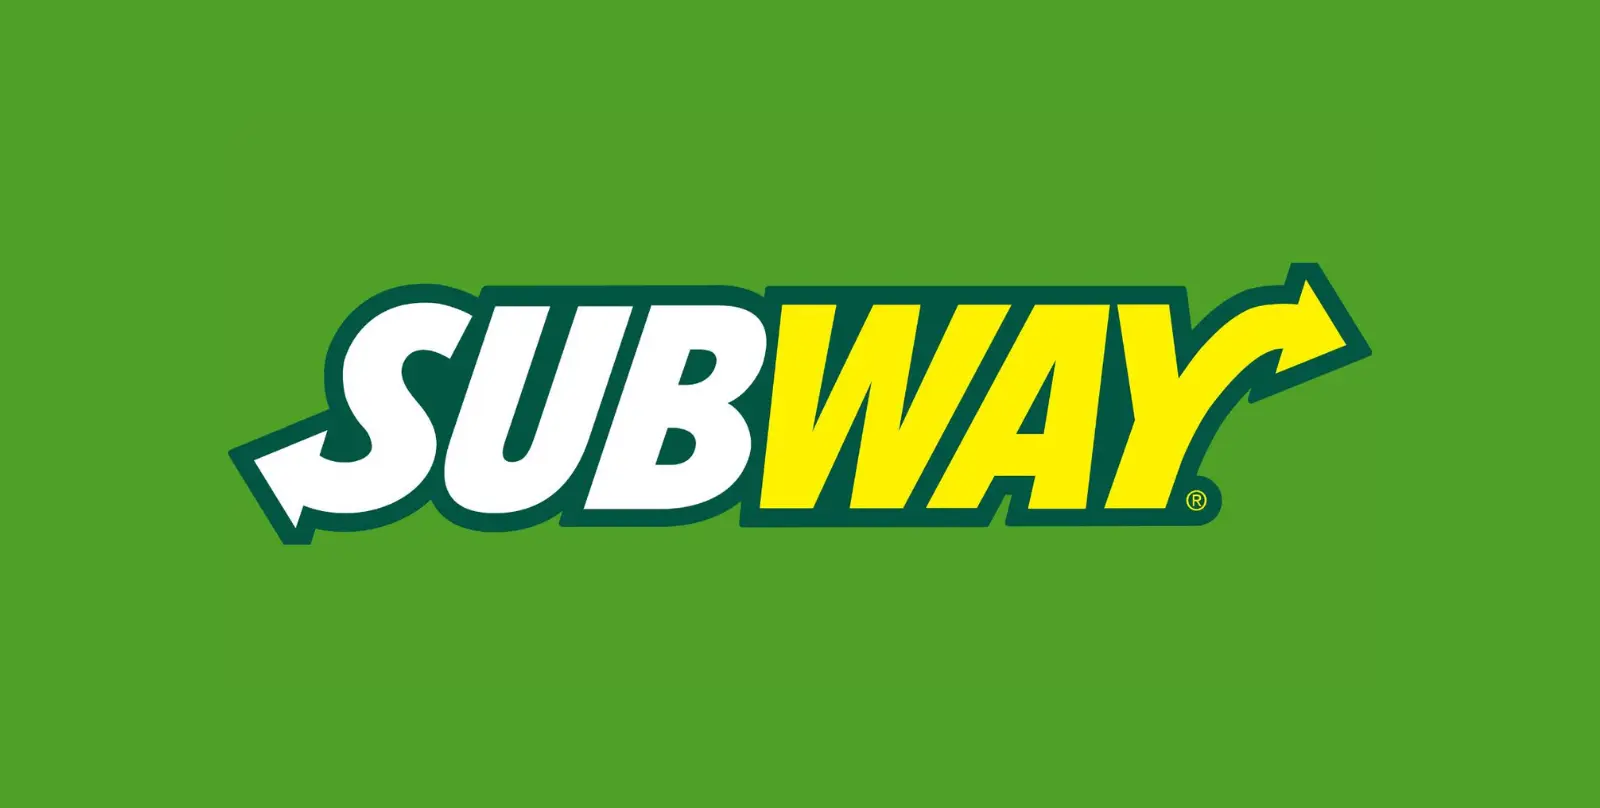 subway menu prices australia